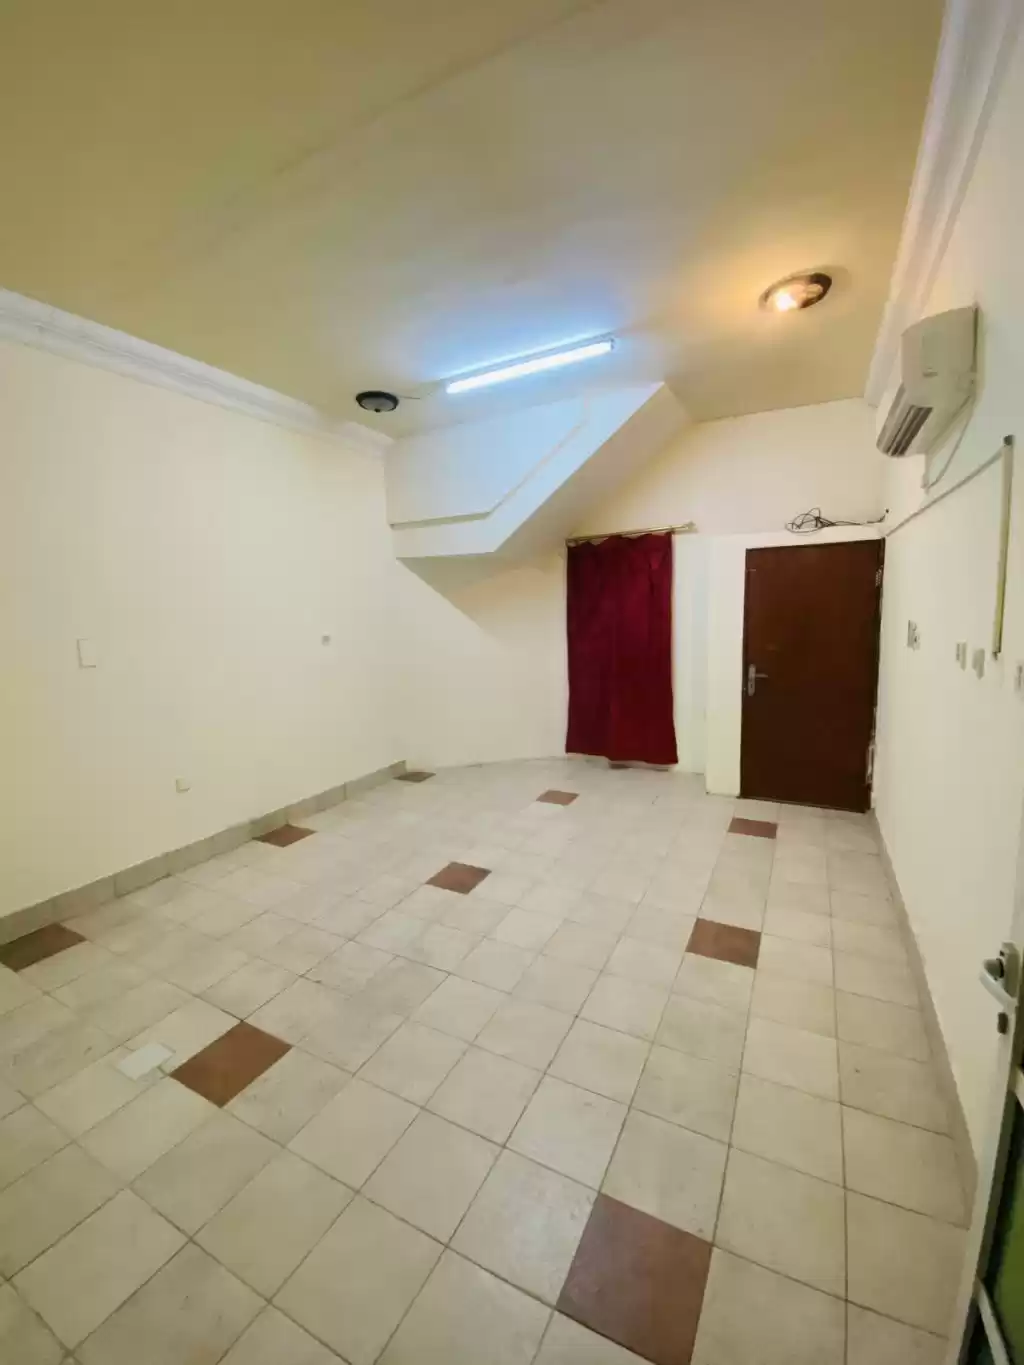 Résidentiel Propriété prête Studio U / f Appartement  a louer au Al-Sadd , Doha #13381 - 1  image 